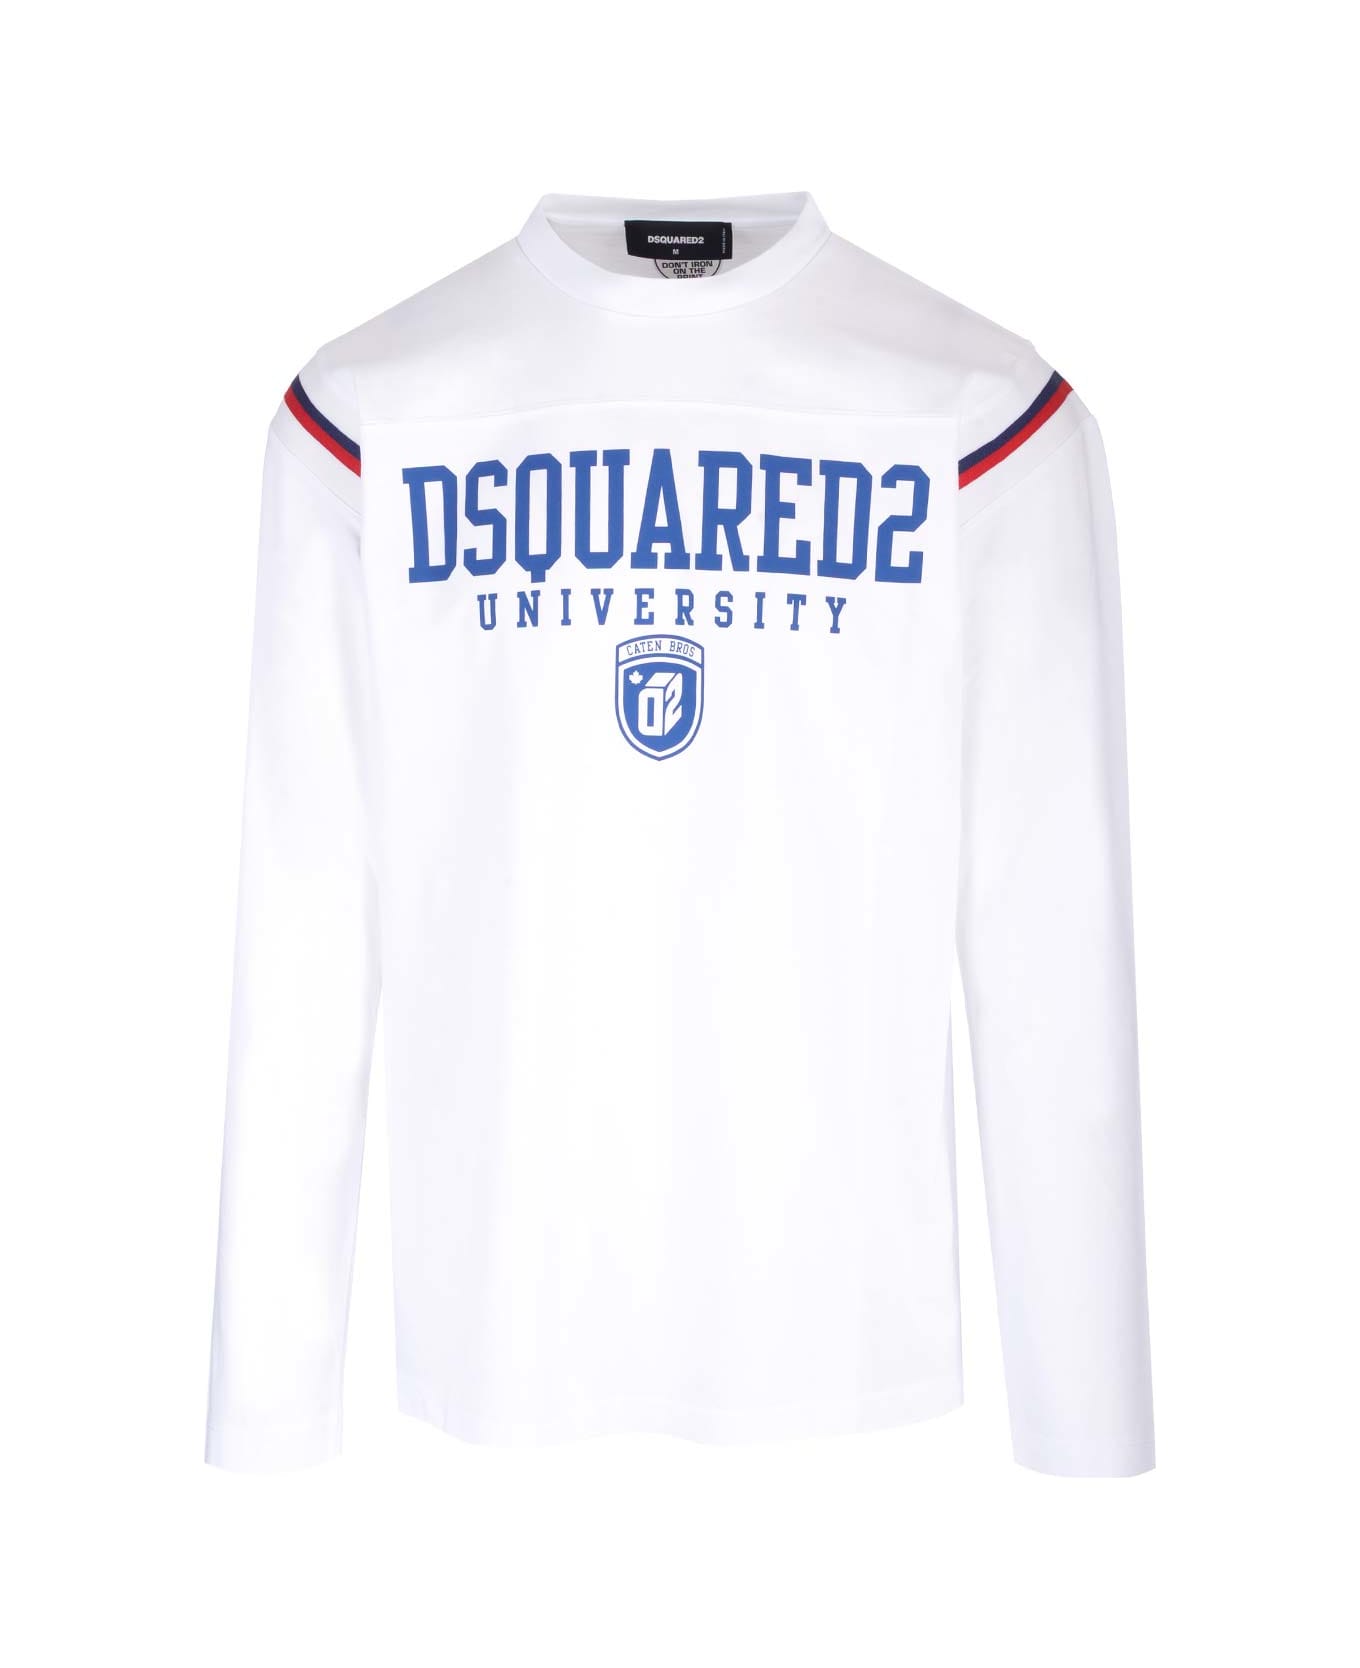 Dsquared2 "university Varsity" T-shirt - White